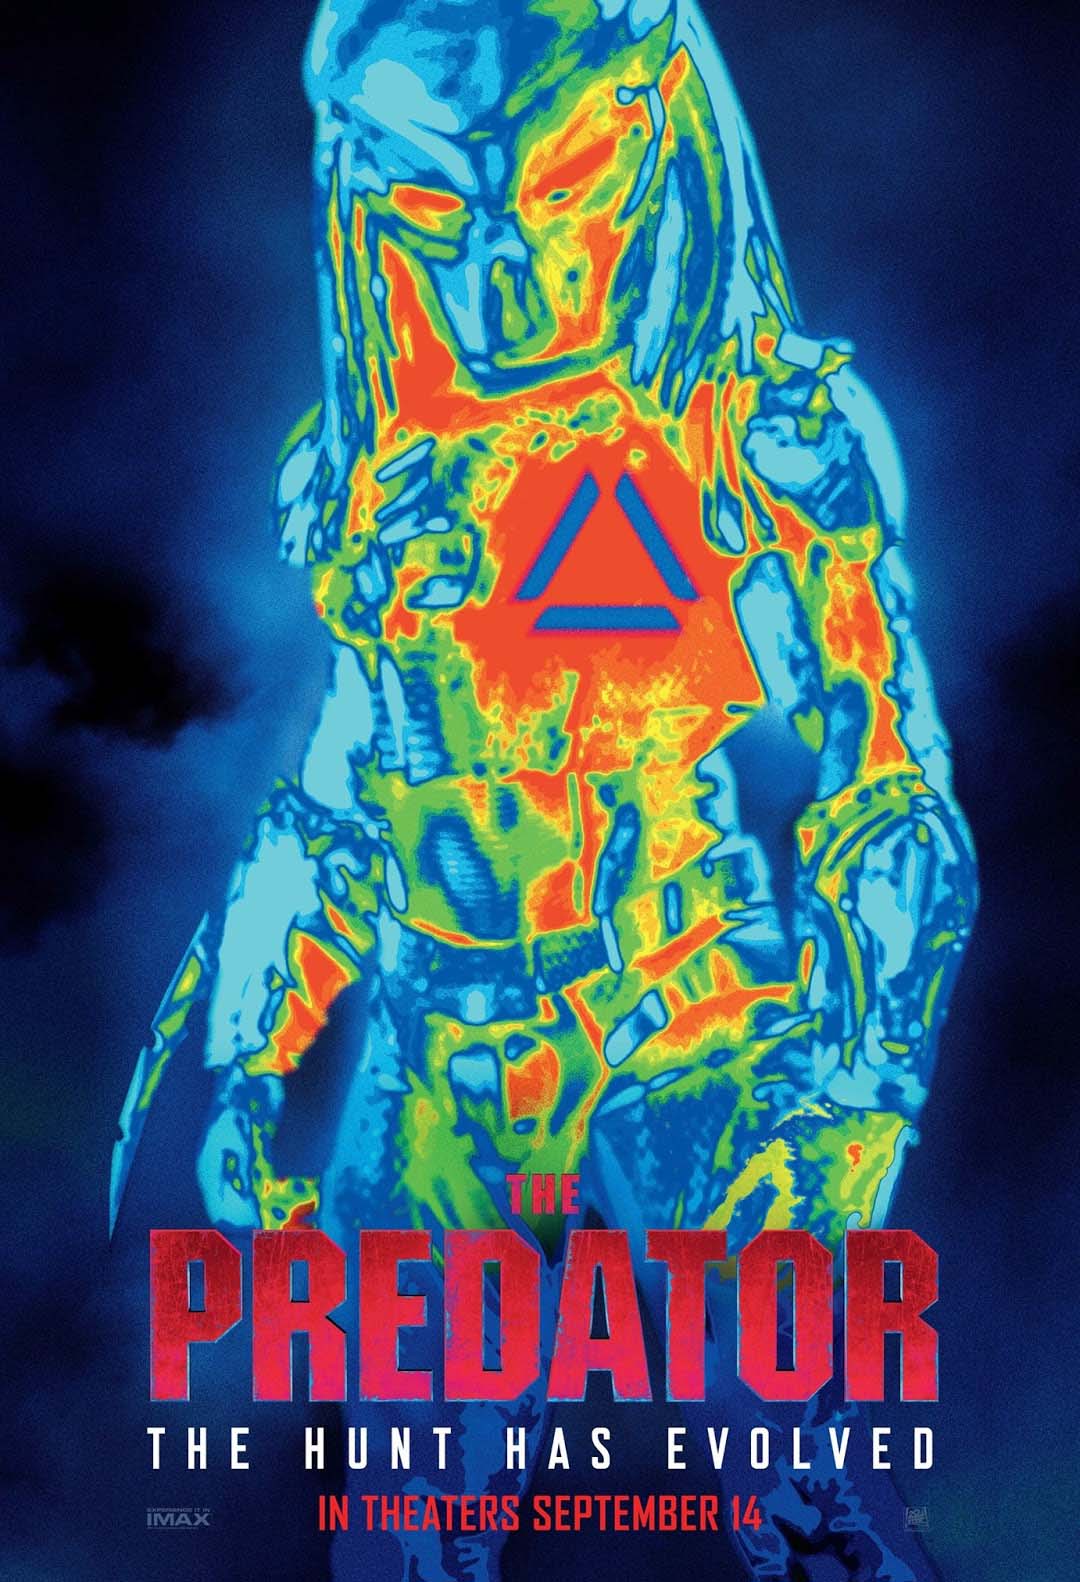 The Predator (2018) Full Movie Free Online